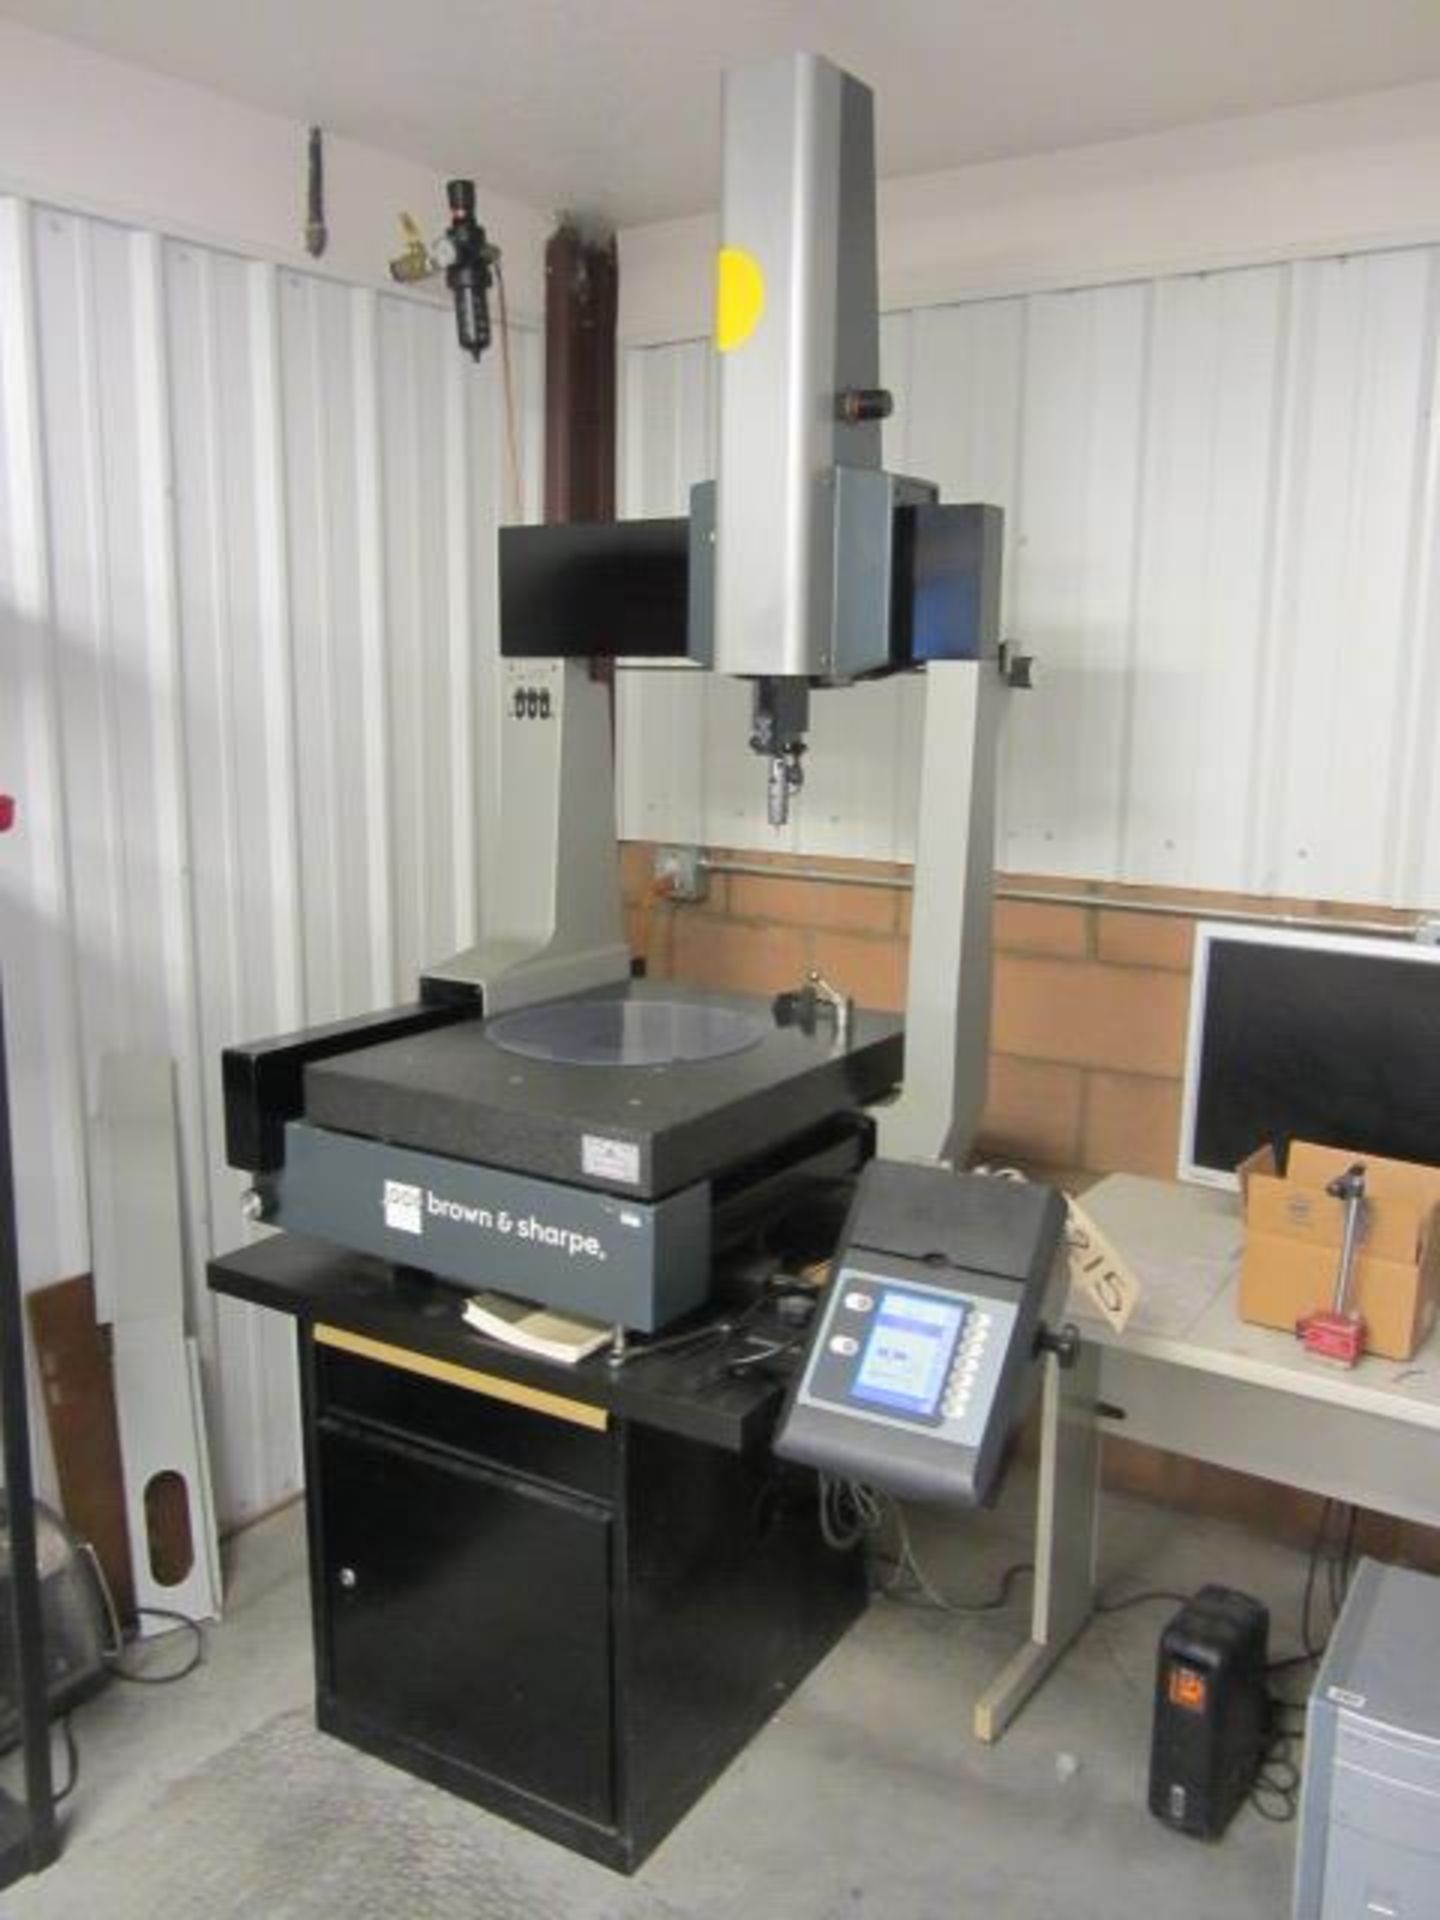 Brown & Sharpe Gage 2000 Coordinate Measuring Machine with PLC Control, Printer, Probe, sn:0604- - Image 3 of 8